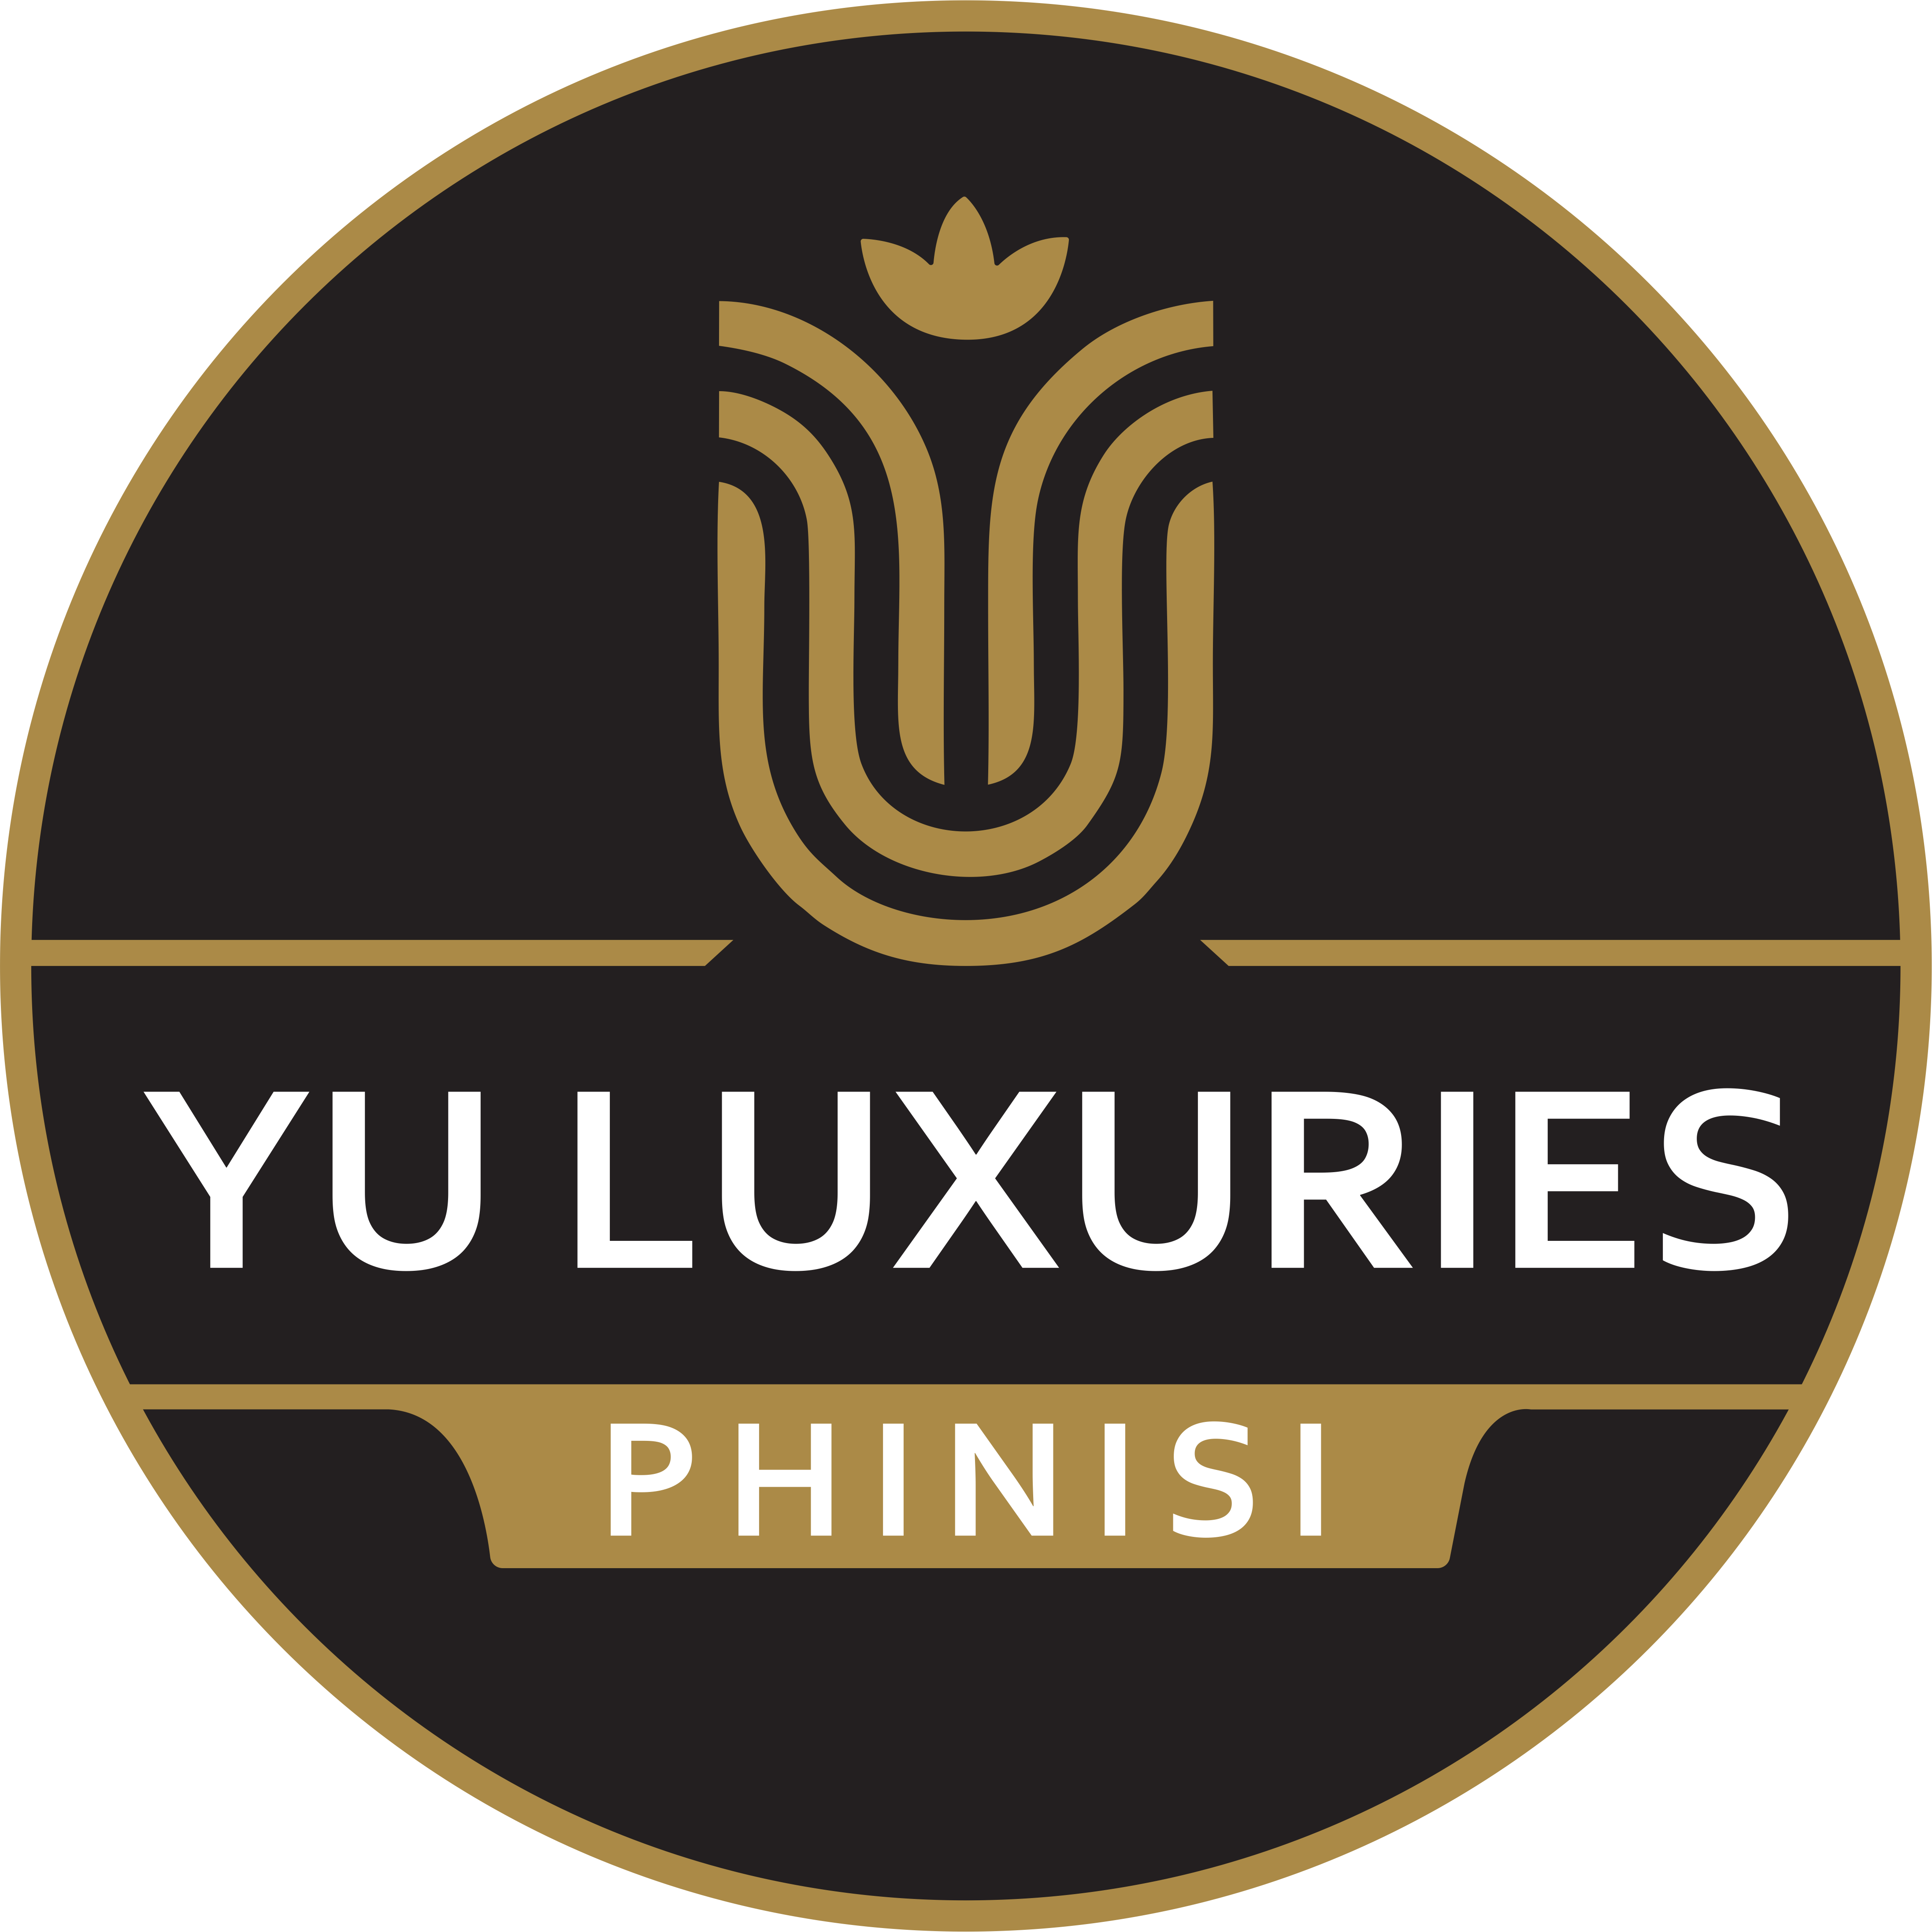 Yuluxuries Phinisi logo